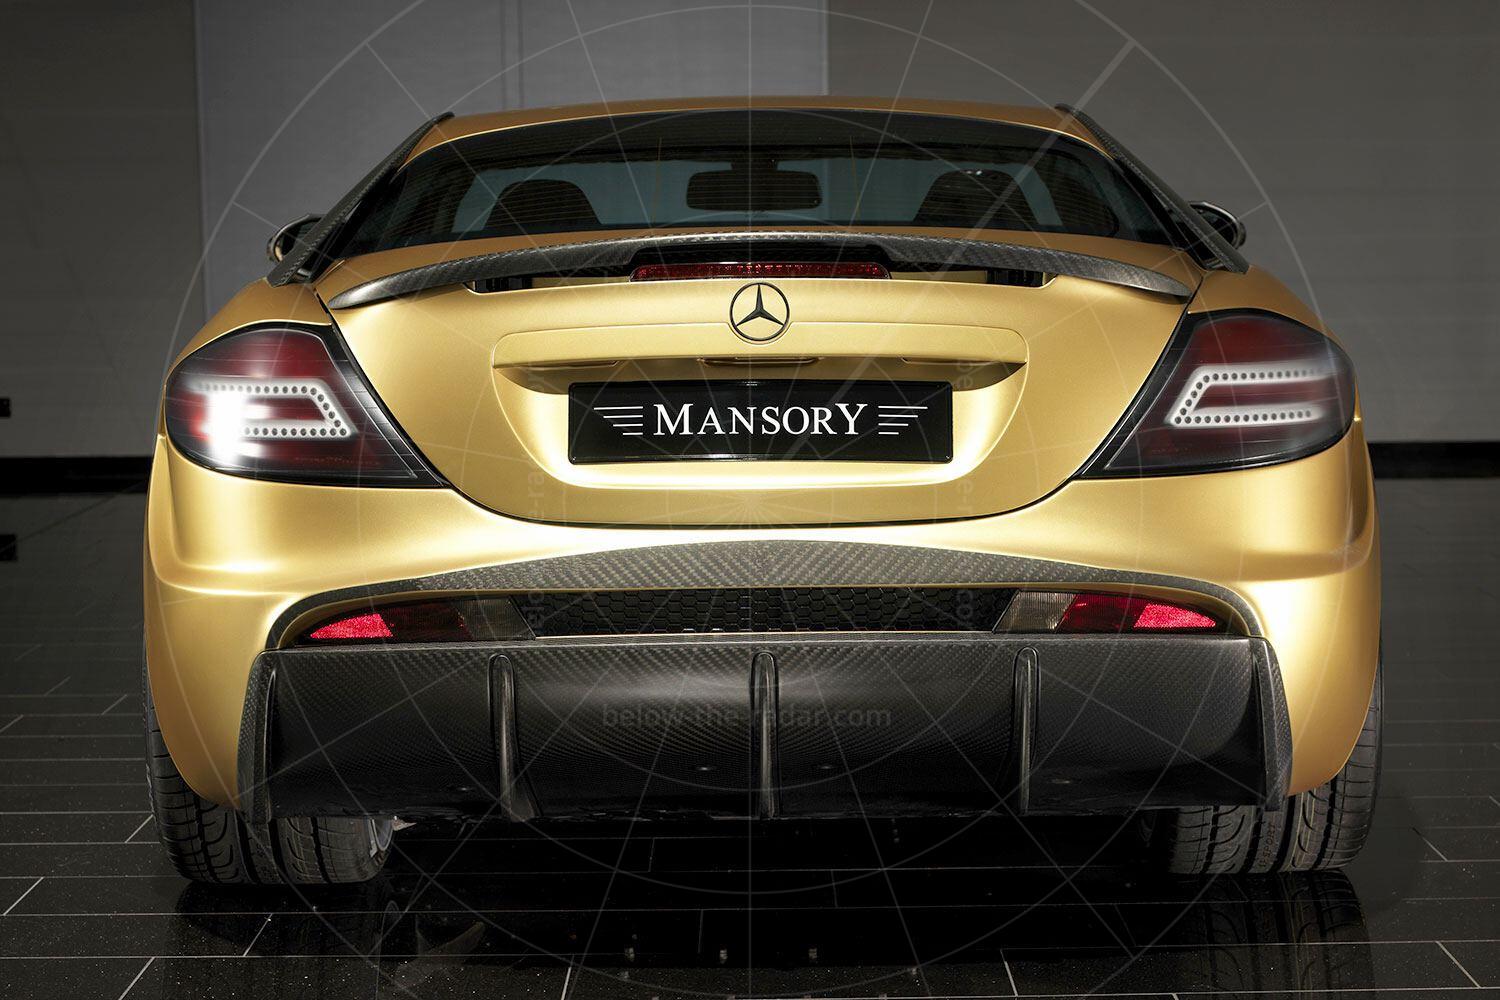 Mercedes SLR Mansory Renovatio Pic: Mansory | Mercedes SLR Mansory Renovatio